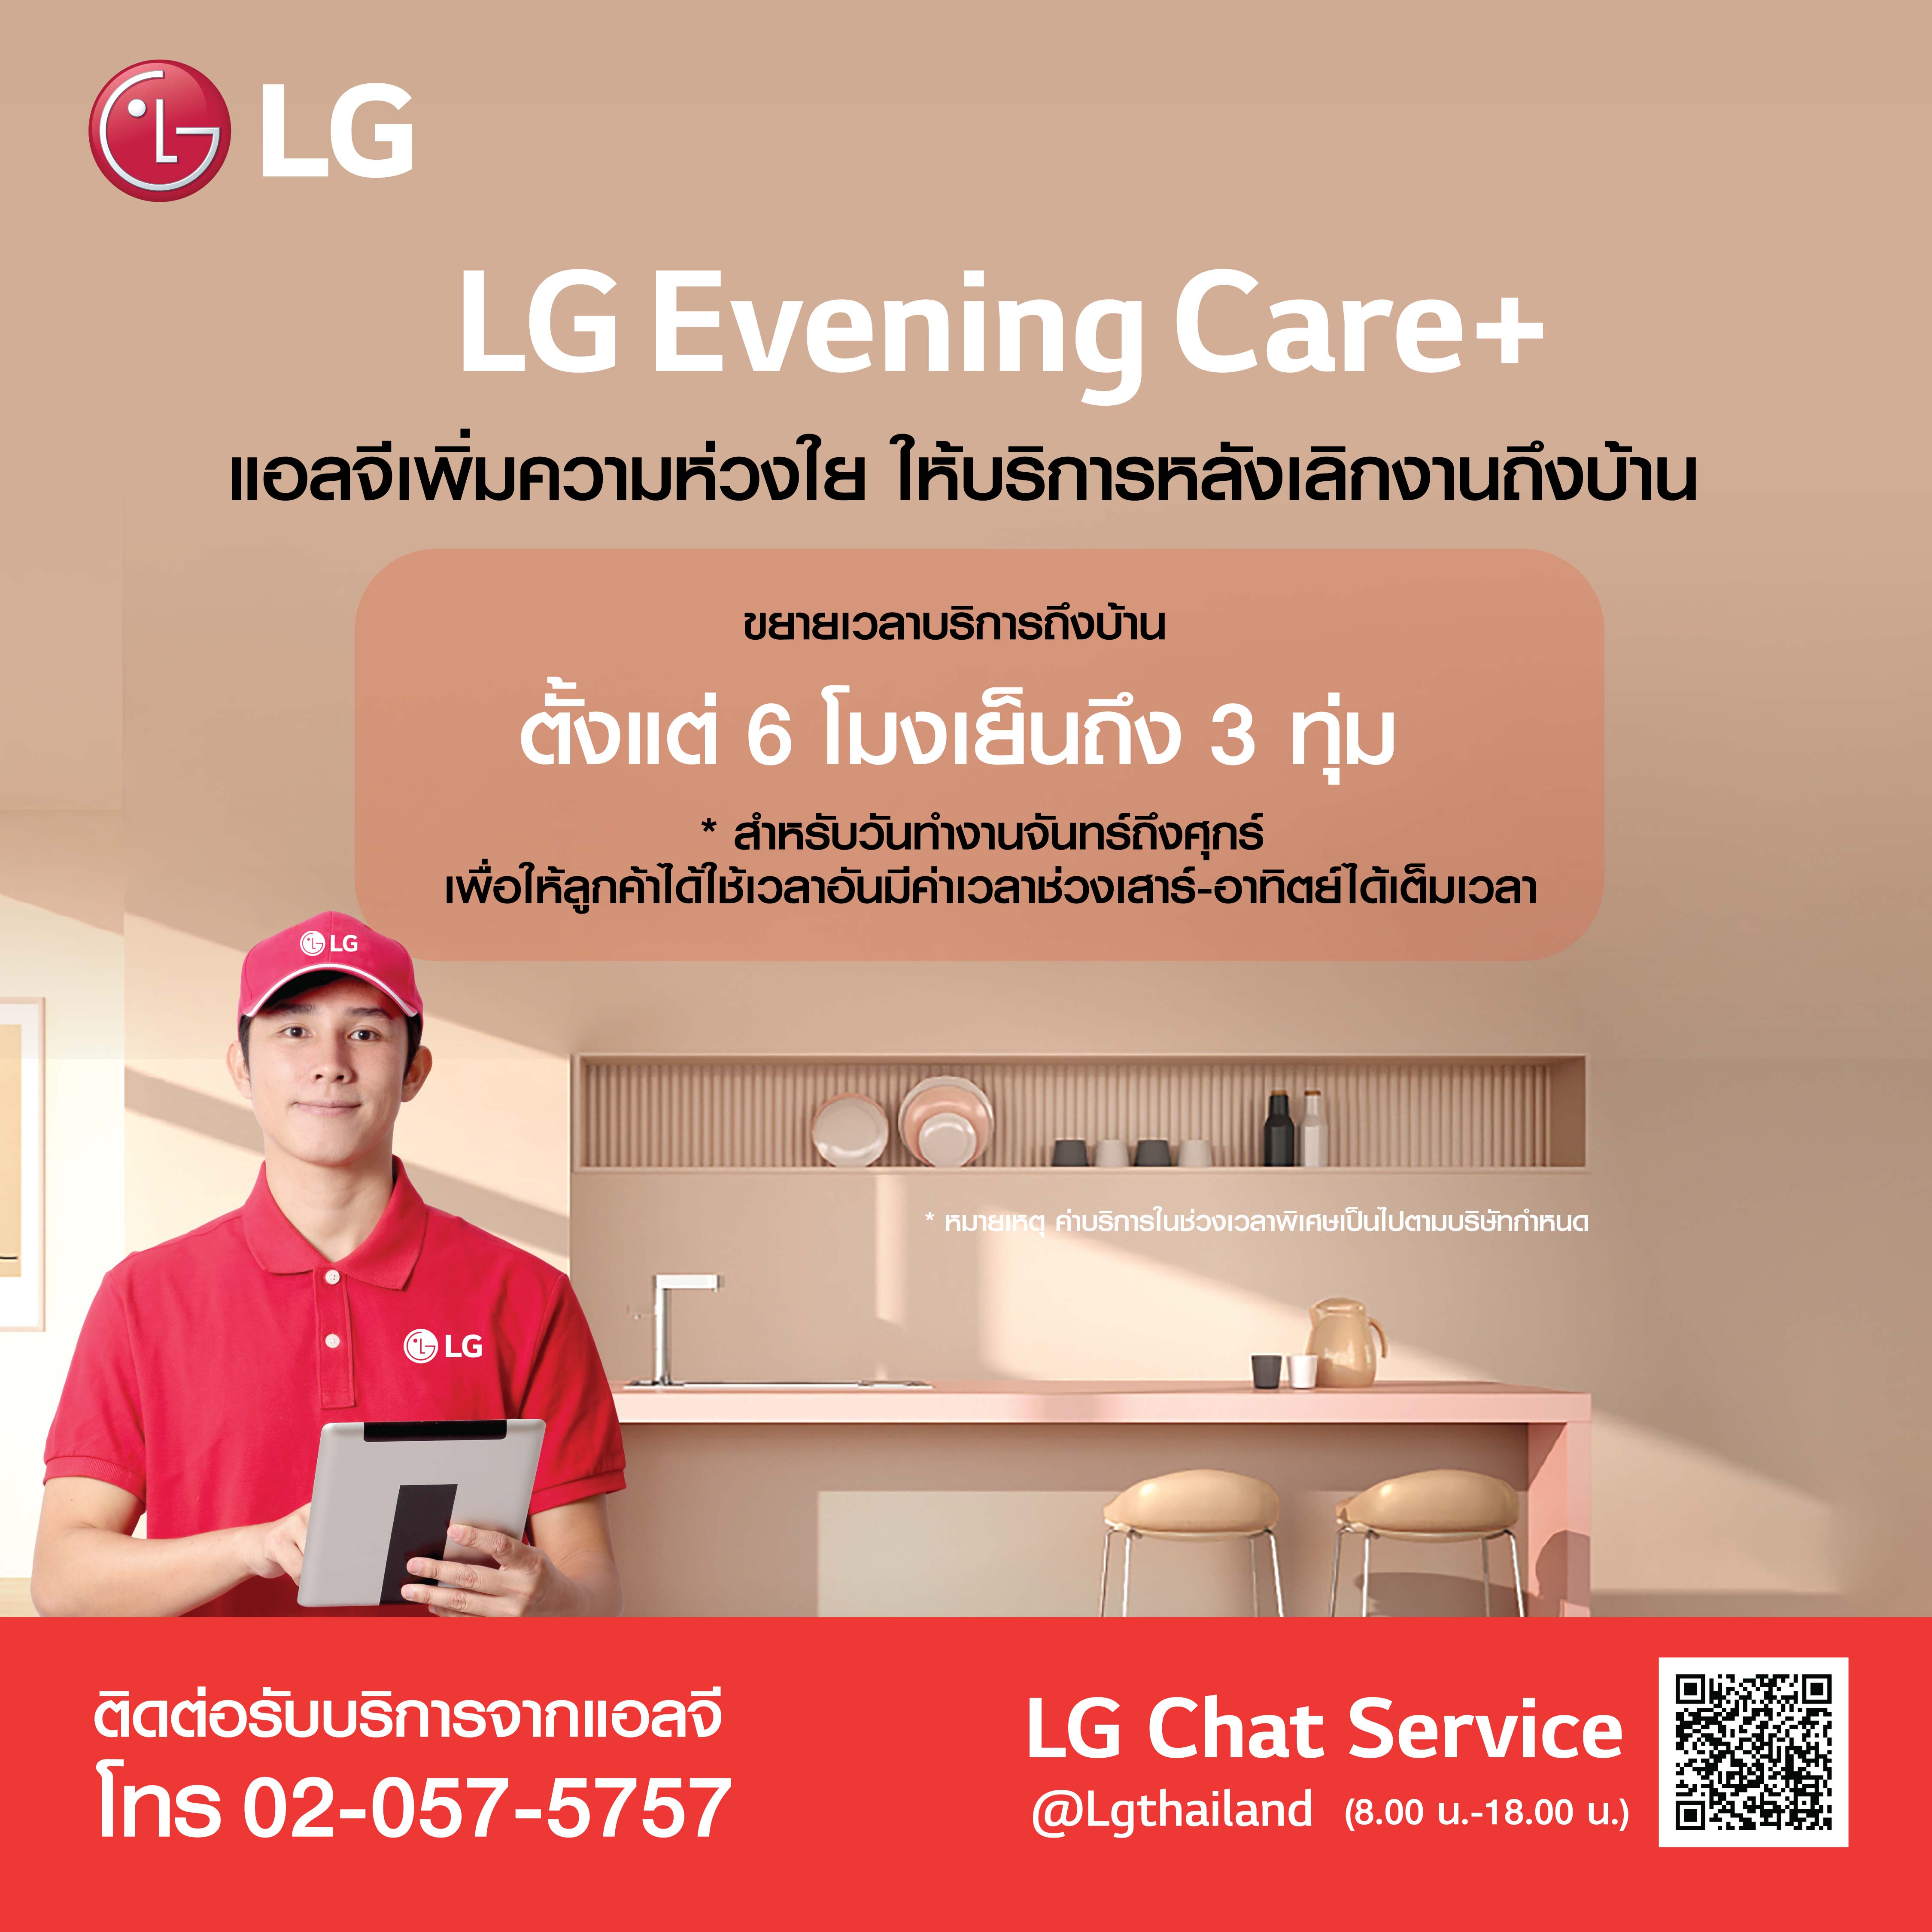 LG Evening Care⁺